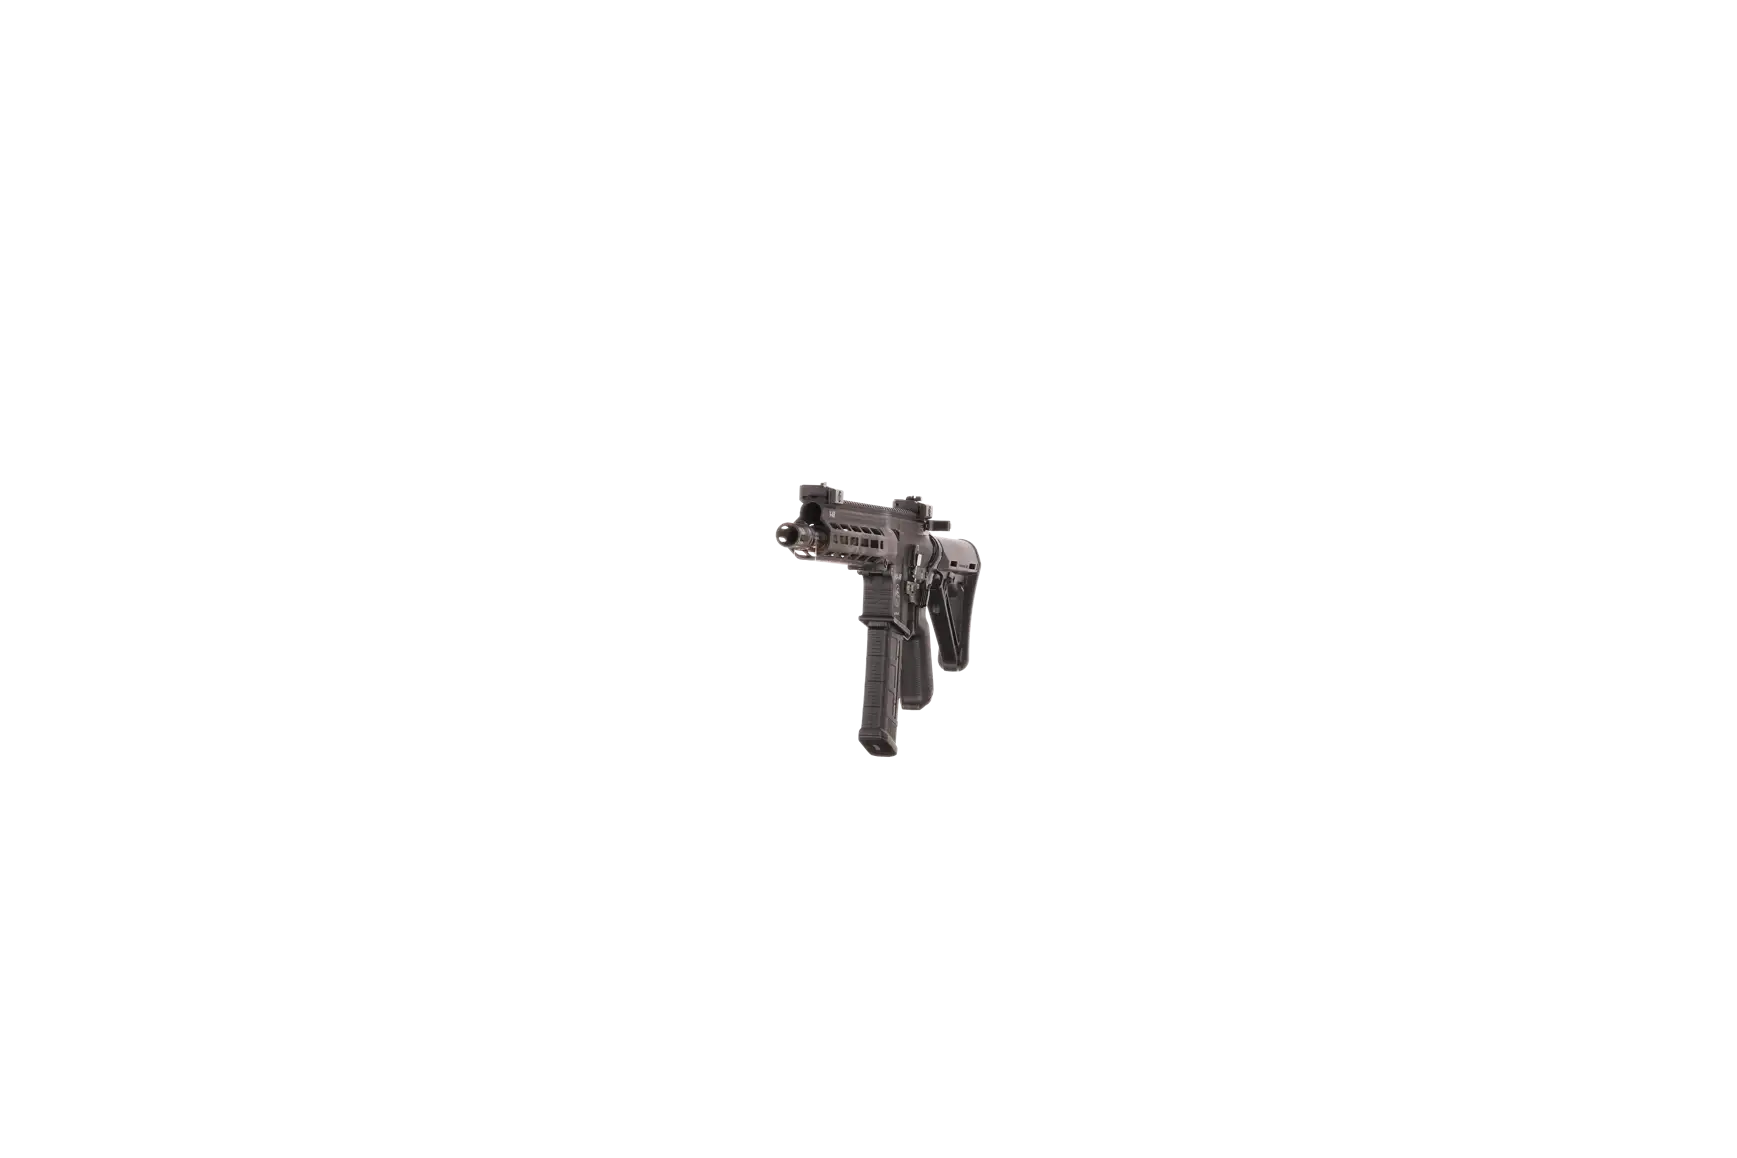 Náhledový obrázek pušky V-AR 556 x 45mm SPINVIEW 1 R21